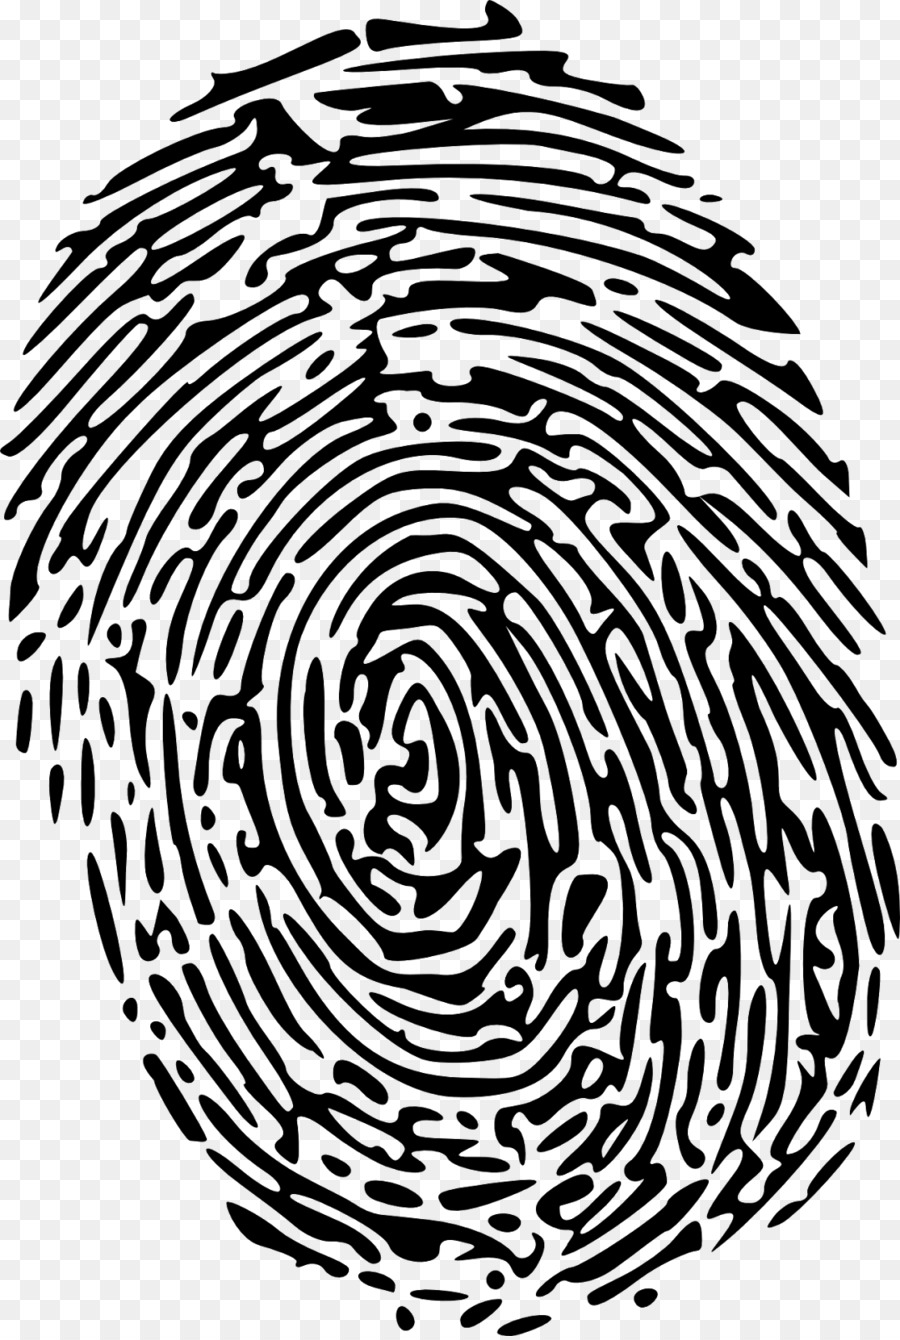 Fingerprint Clip art - handcuffs png download - 1078*1600 - Free Transparent Fingerprint png Download.